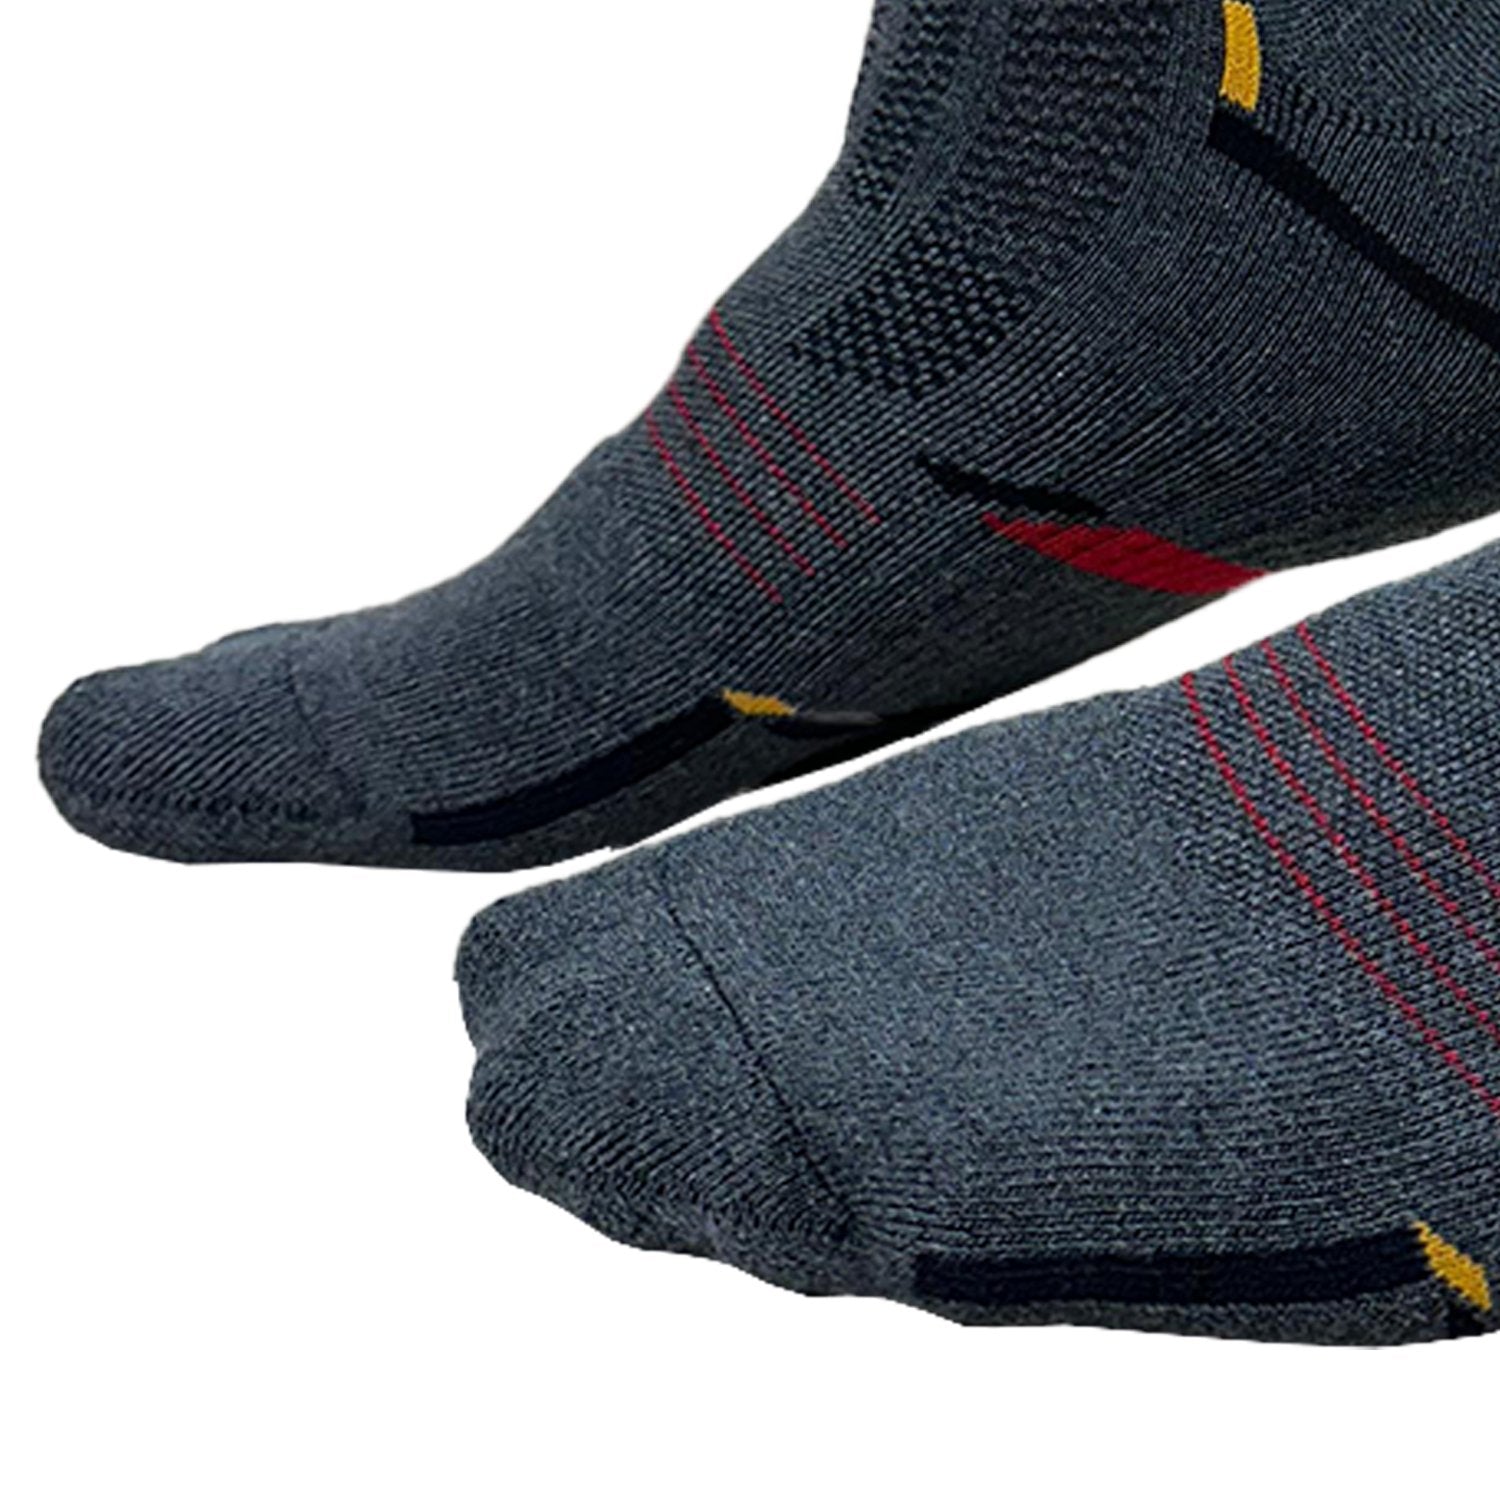 Buy Gokyo Comrade Running Socks UK 7-11 | Socks at Gokyo Outdoor Clothing & Gear